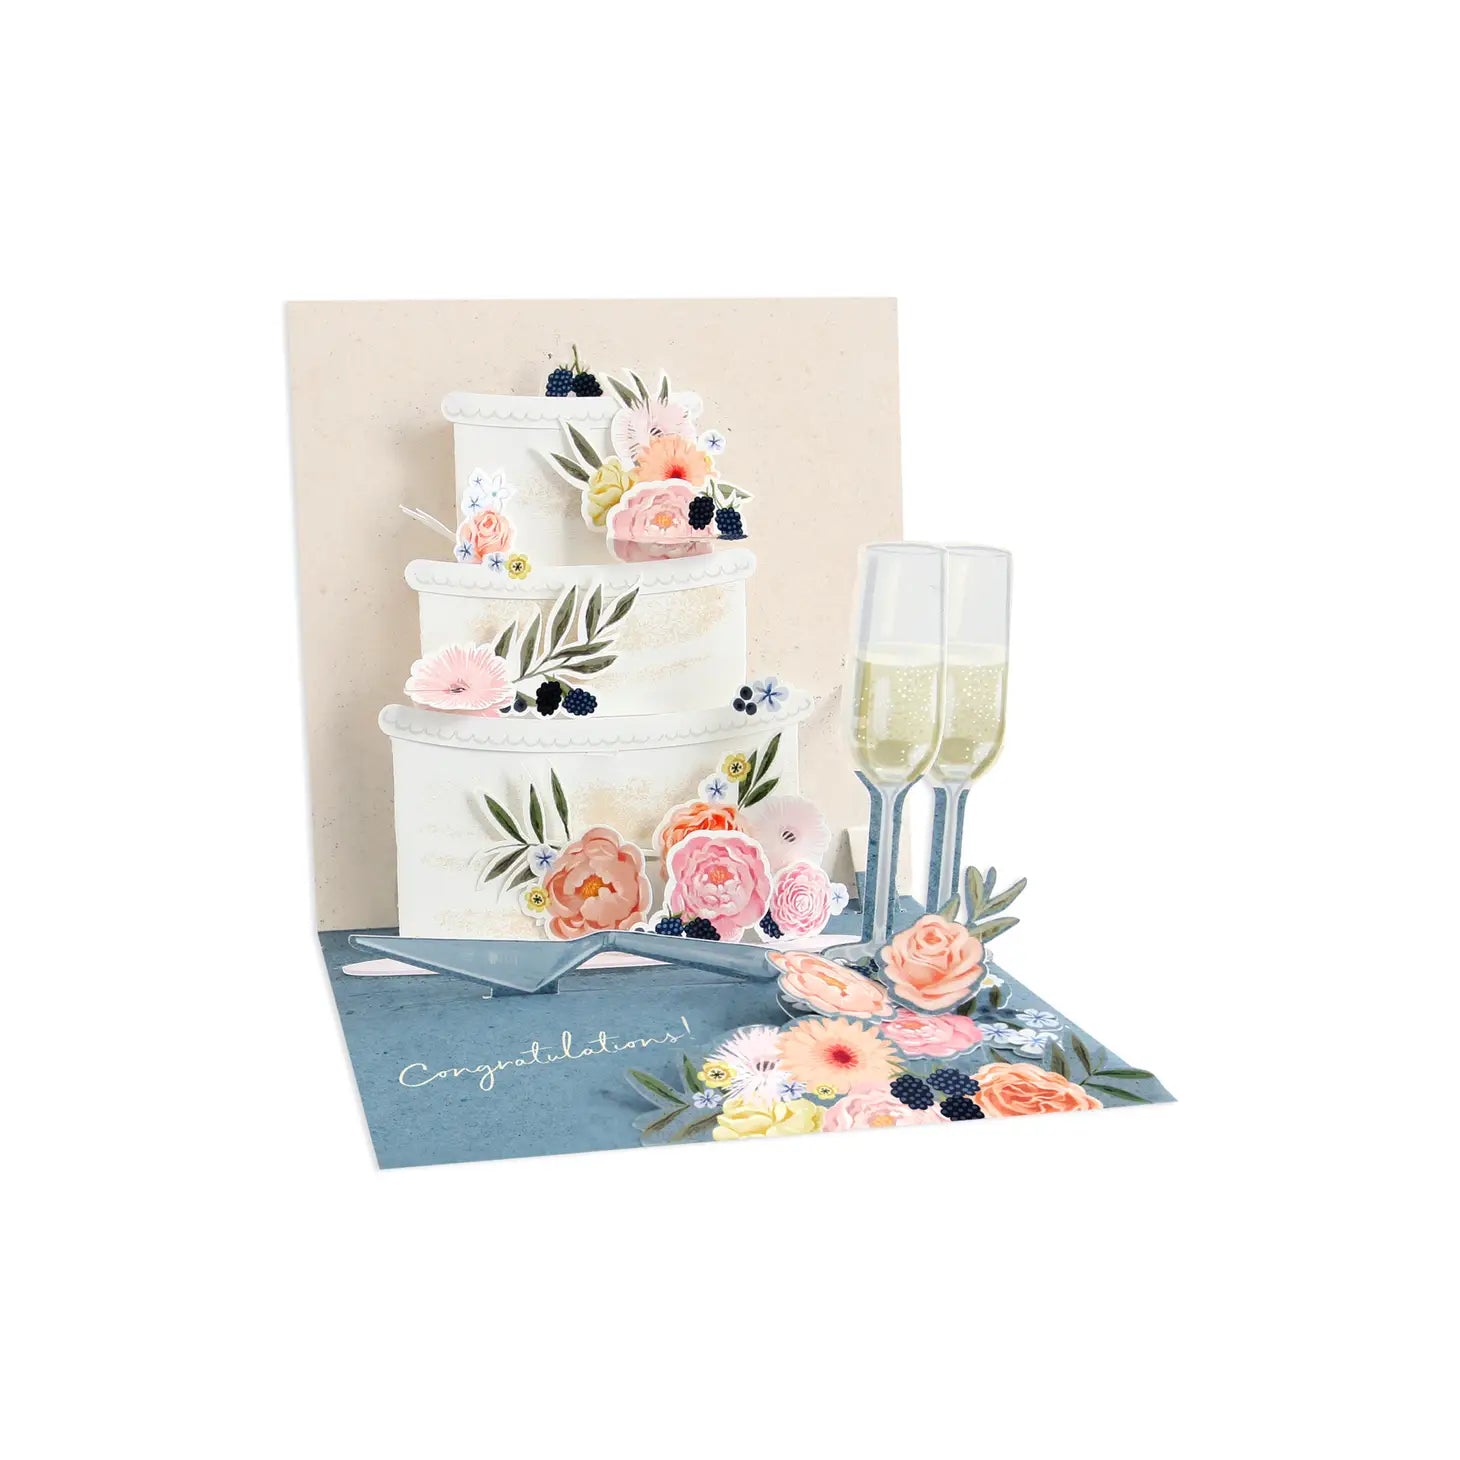 Fondant Wedding Cake Treasures Pop-up Card